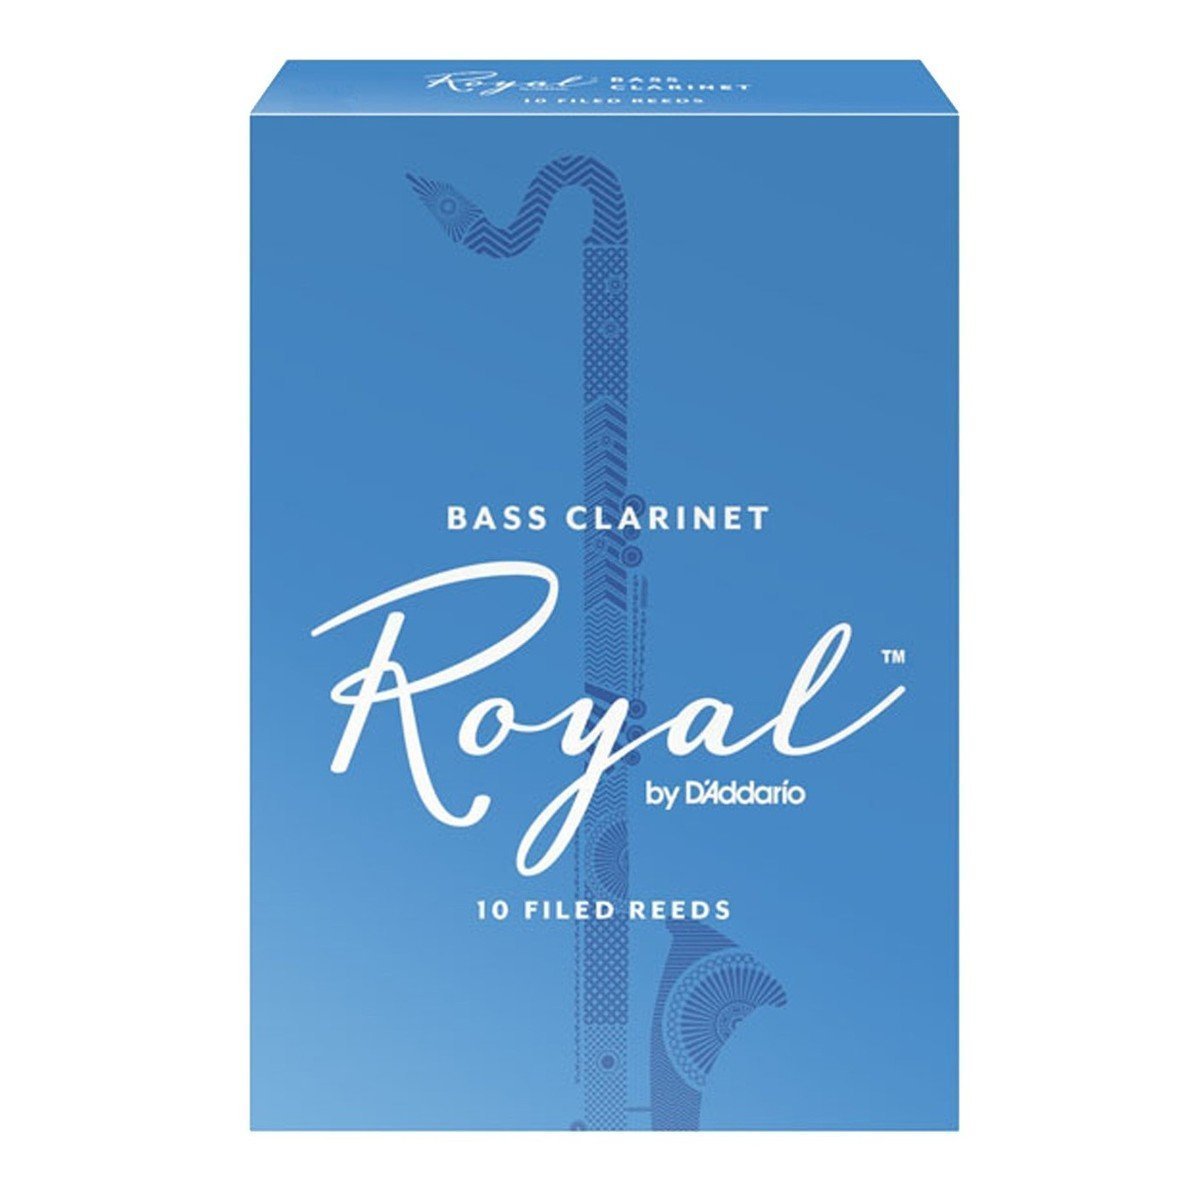 Rico Royal by D'Addario Bass Clarinet Reeds, 3.5 (10-Pack) $58.75 